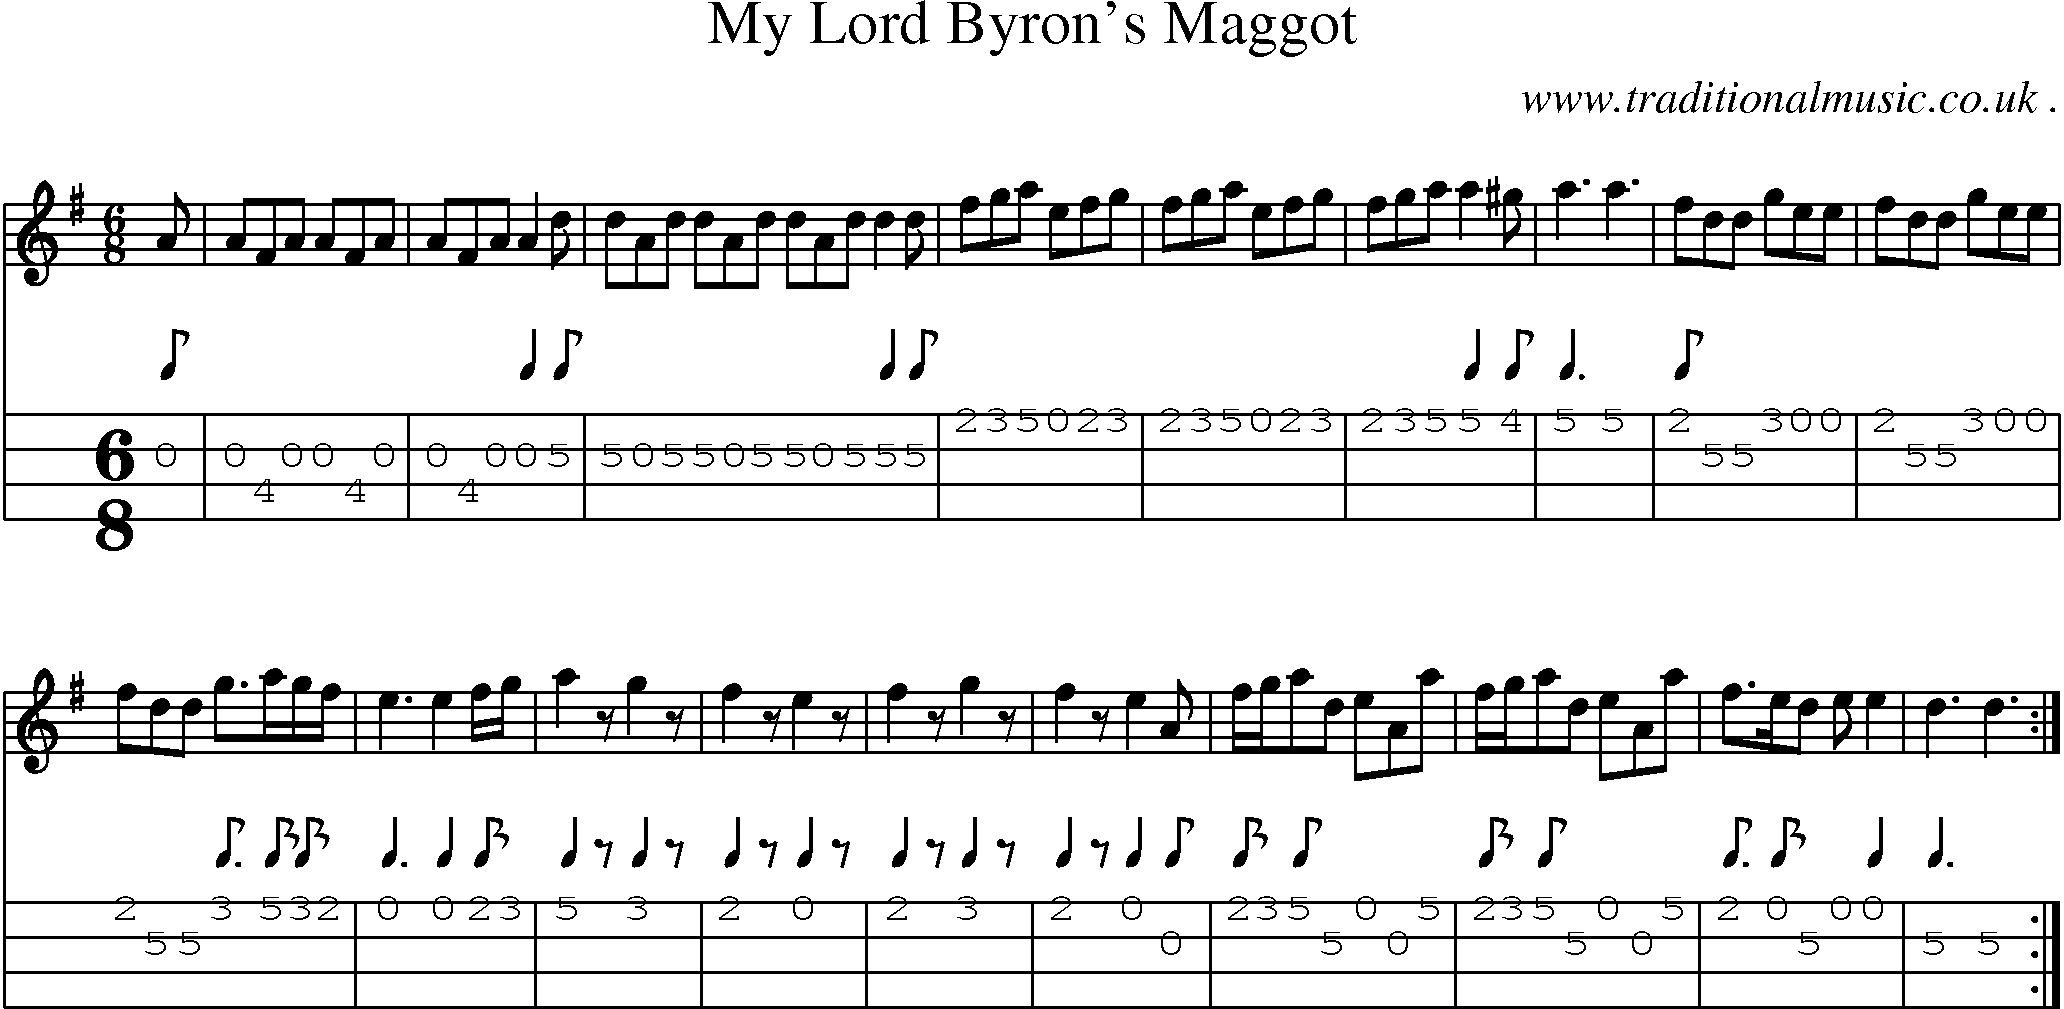 Sheet-Music and Mandolin Tabs for My Lord Byrons Maggot